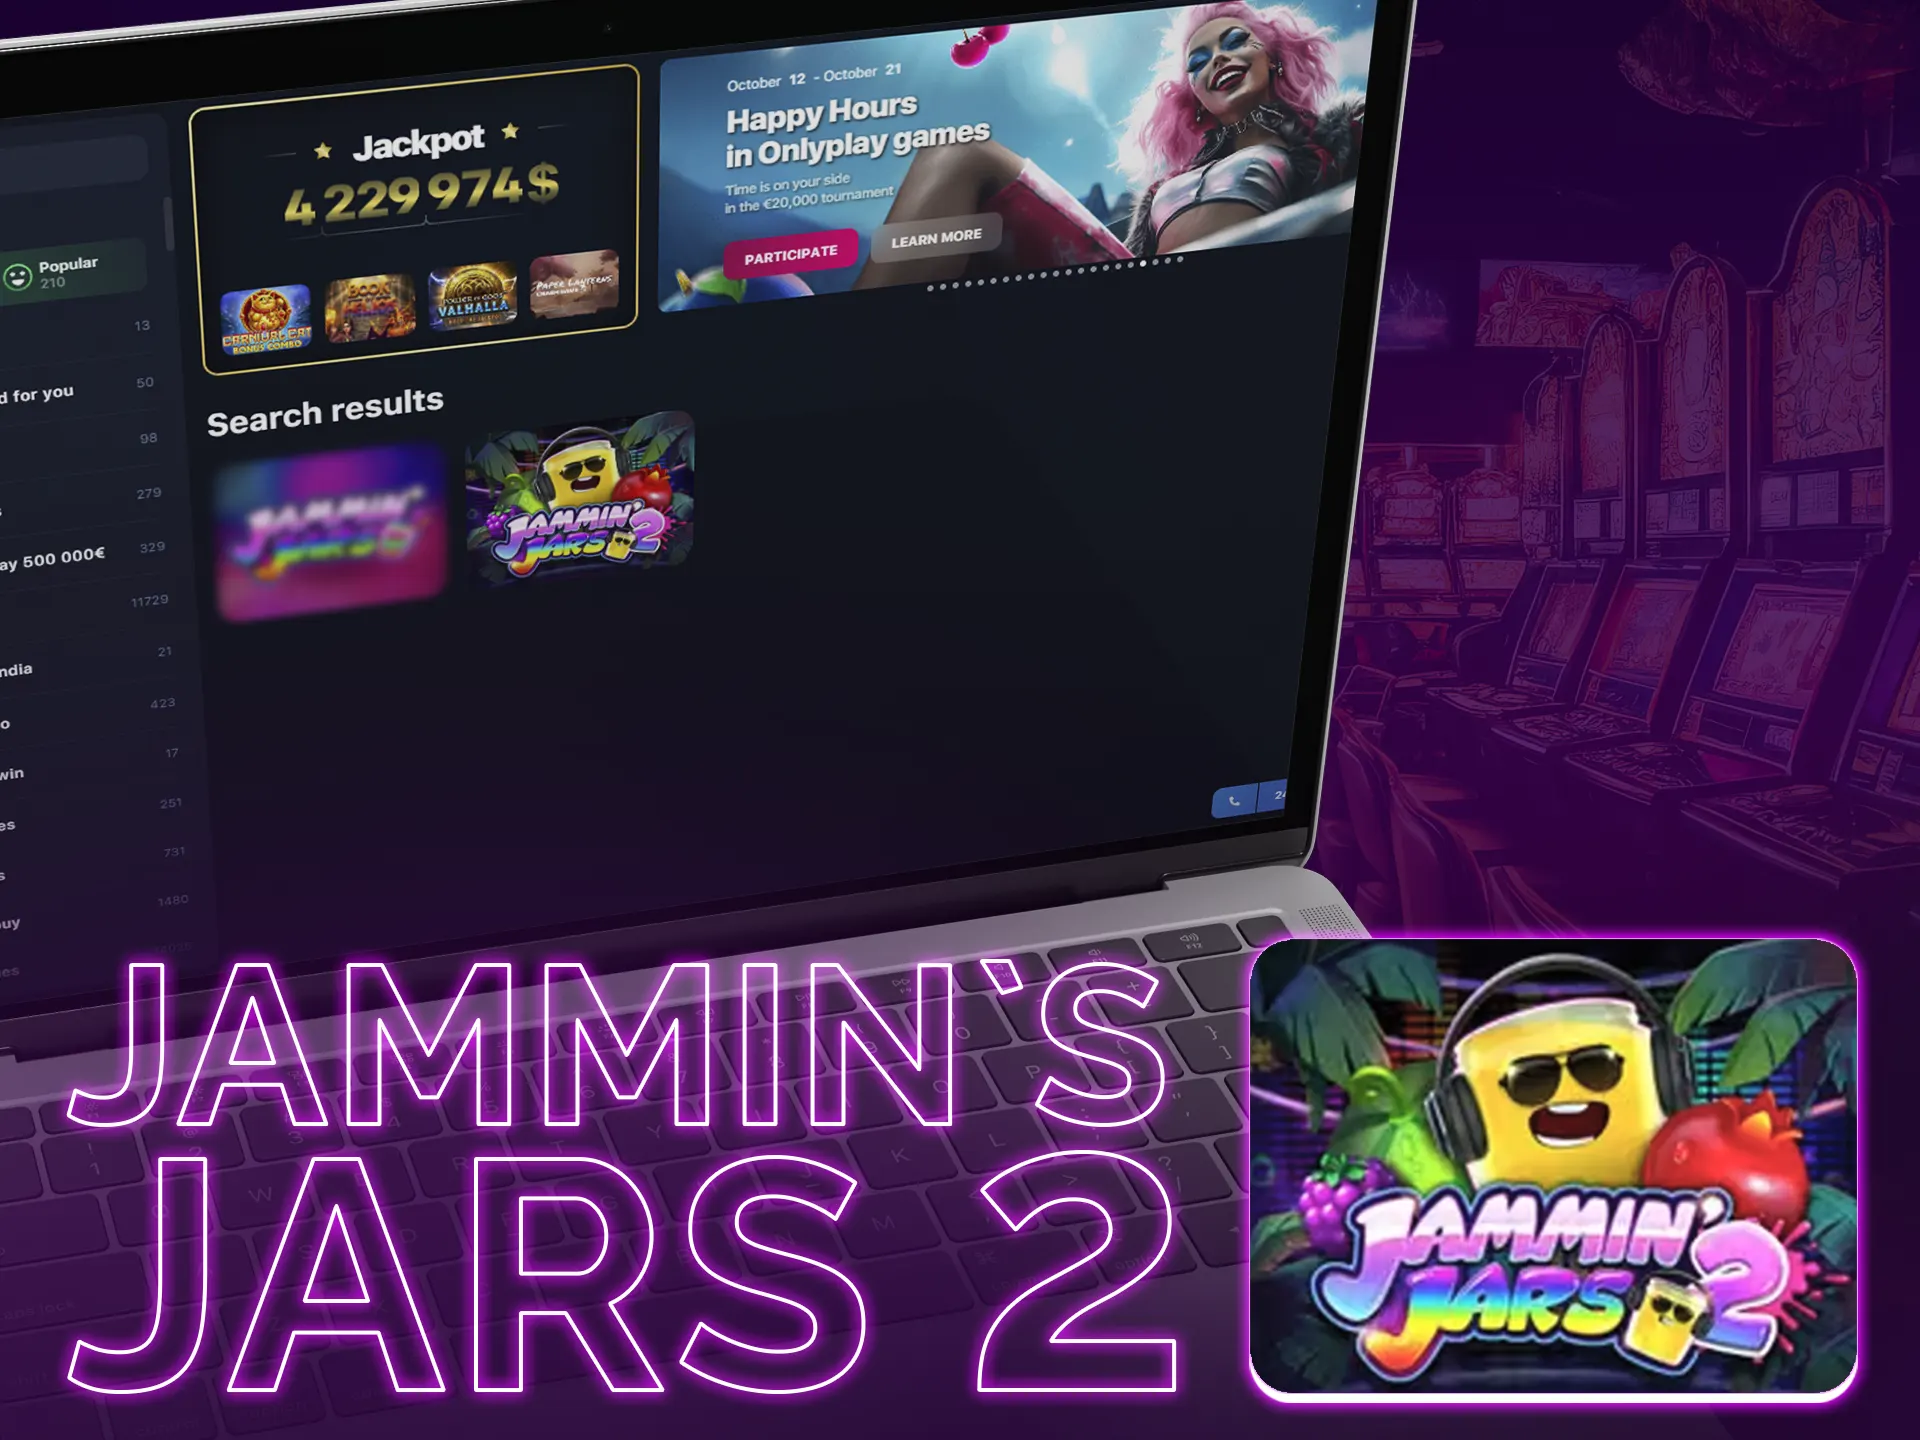 Jammins Jars 2: enhanced graphics, bonus levels, high RTP.